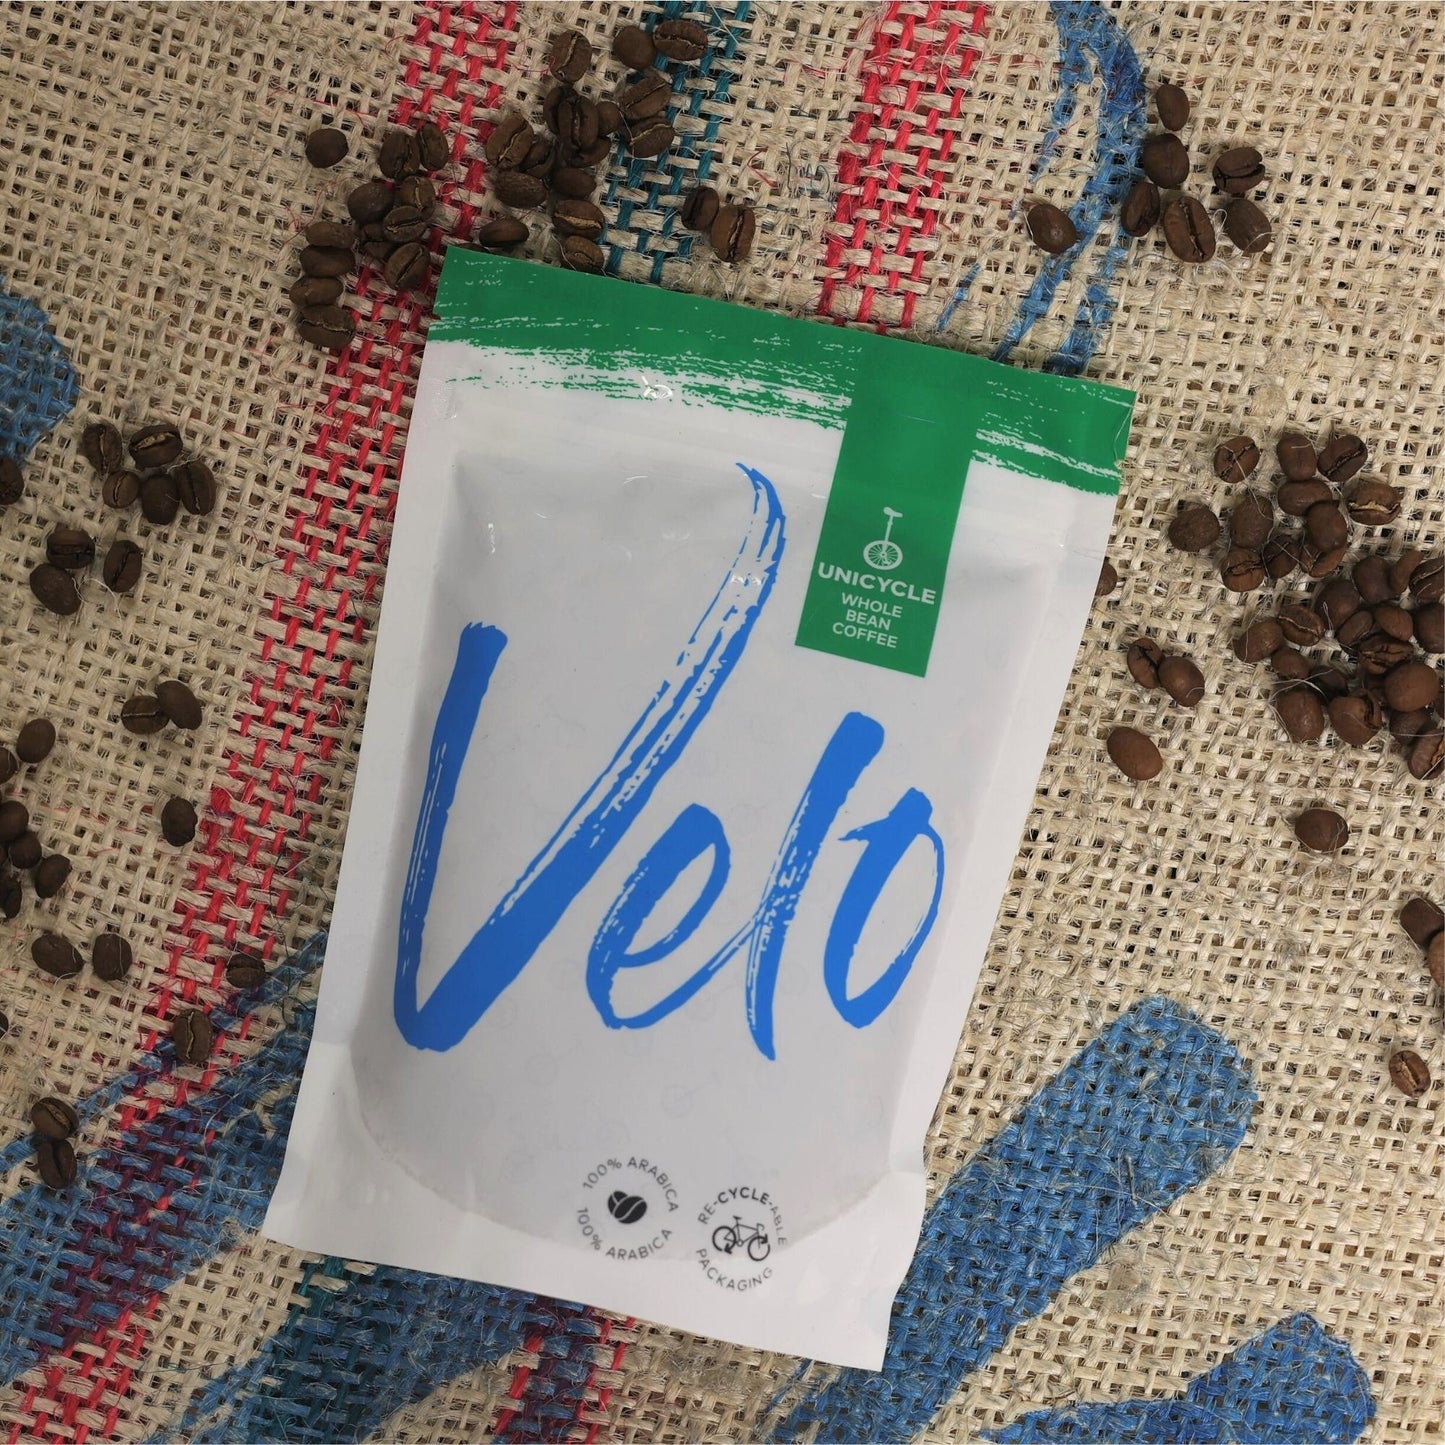 Ratnagiri Honey 200g Coffee Bag India - Velo Coffee Roasters